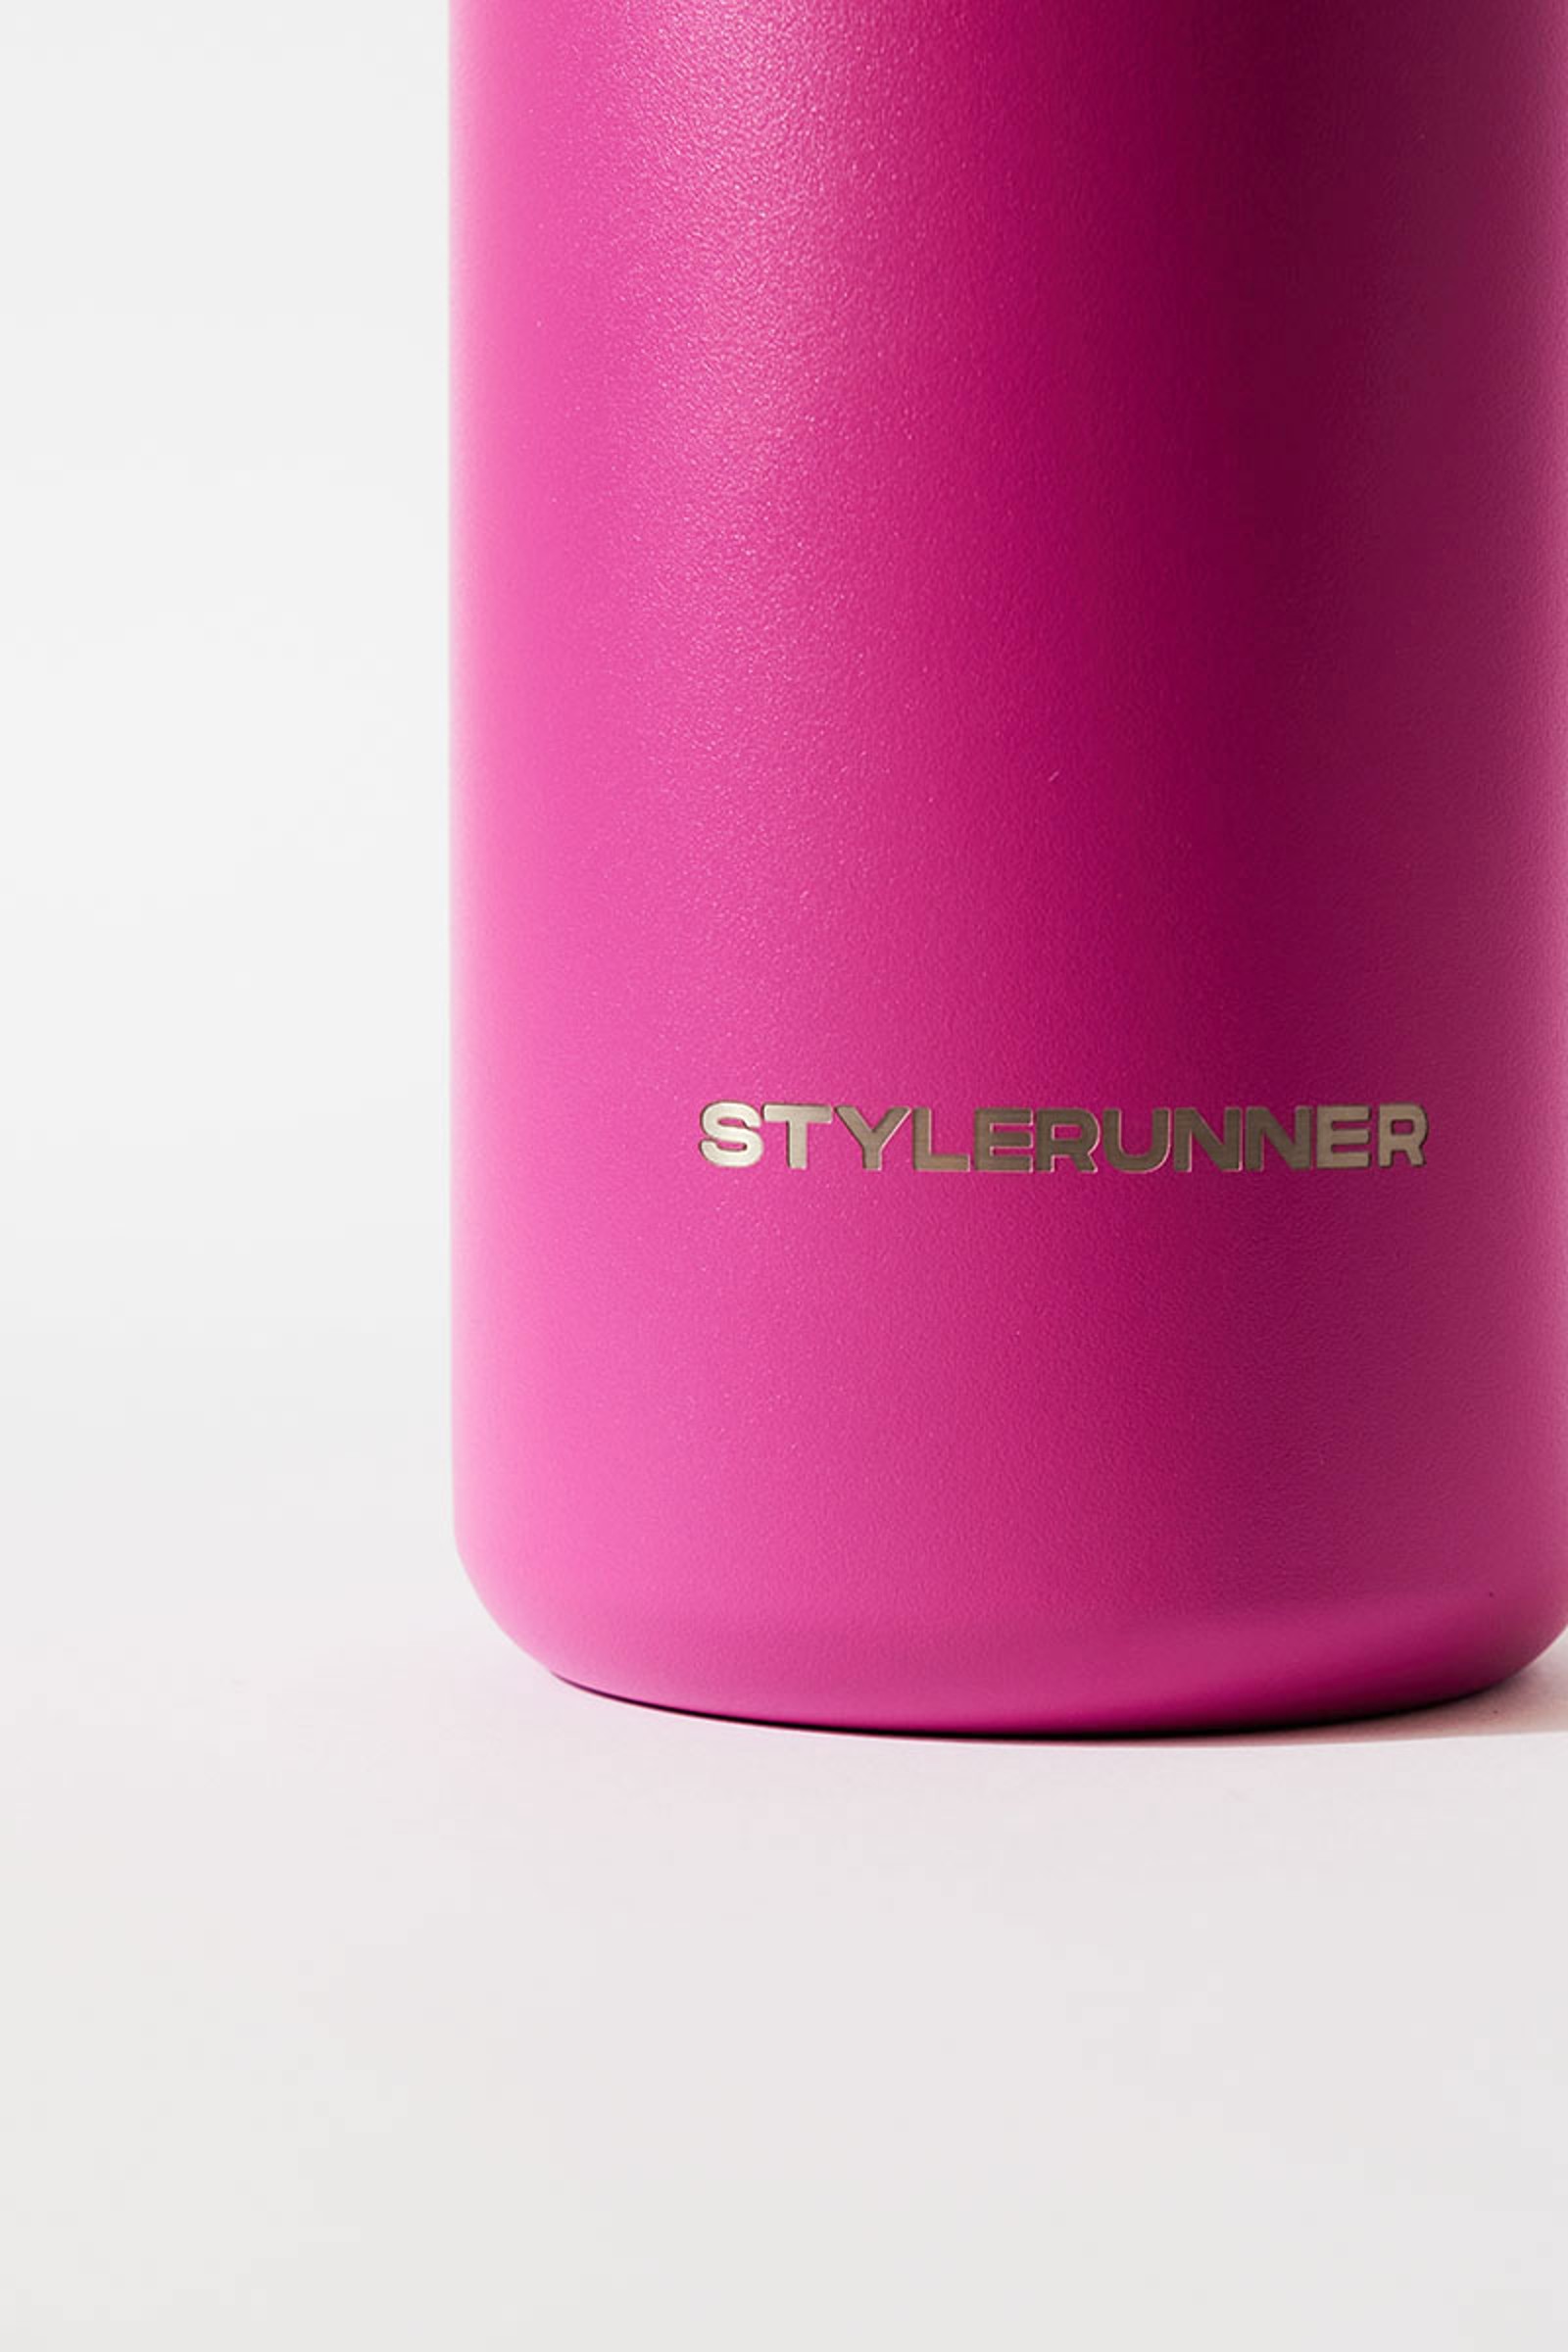 Stylerunner The Original Water Bottle Cobalt